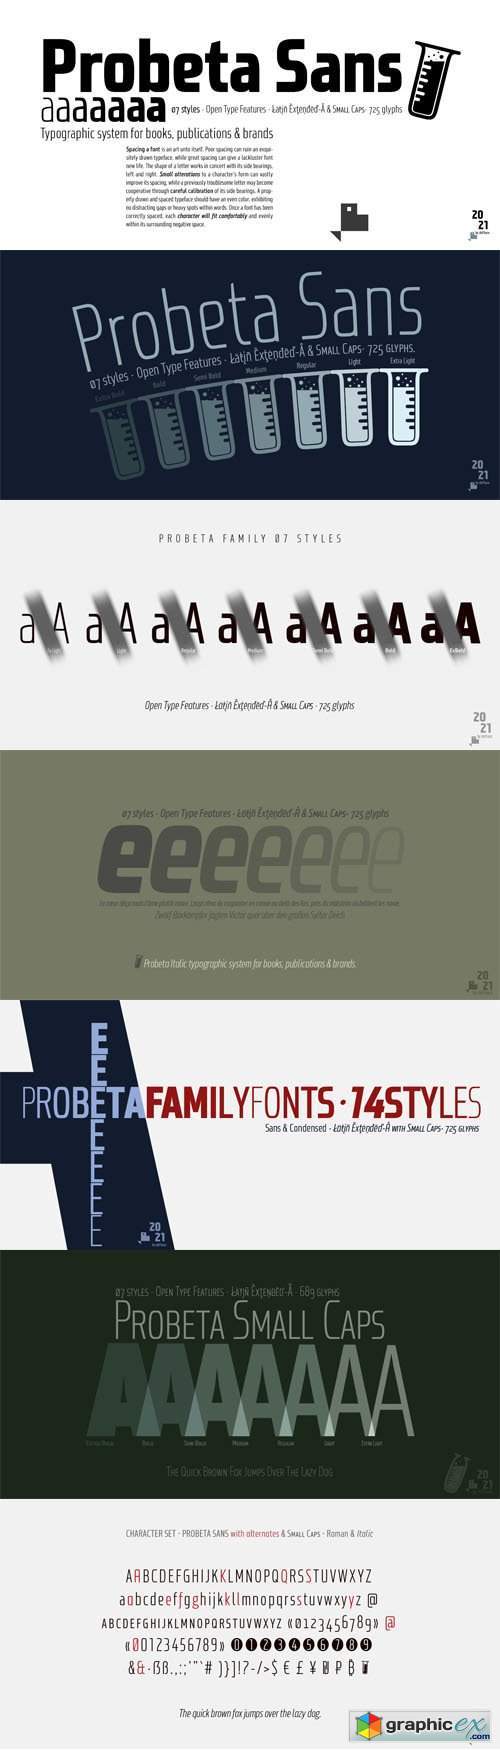 Probeta Sans Serif Font Family [4-Weights]